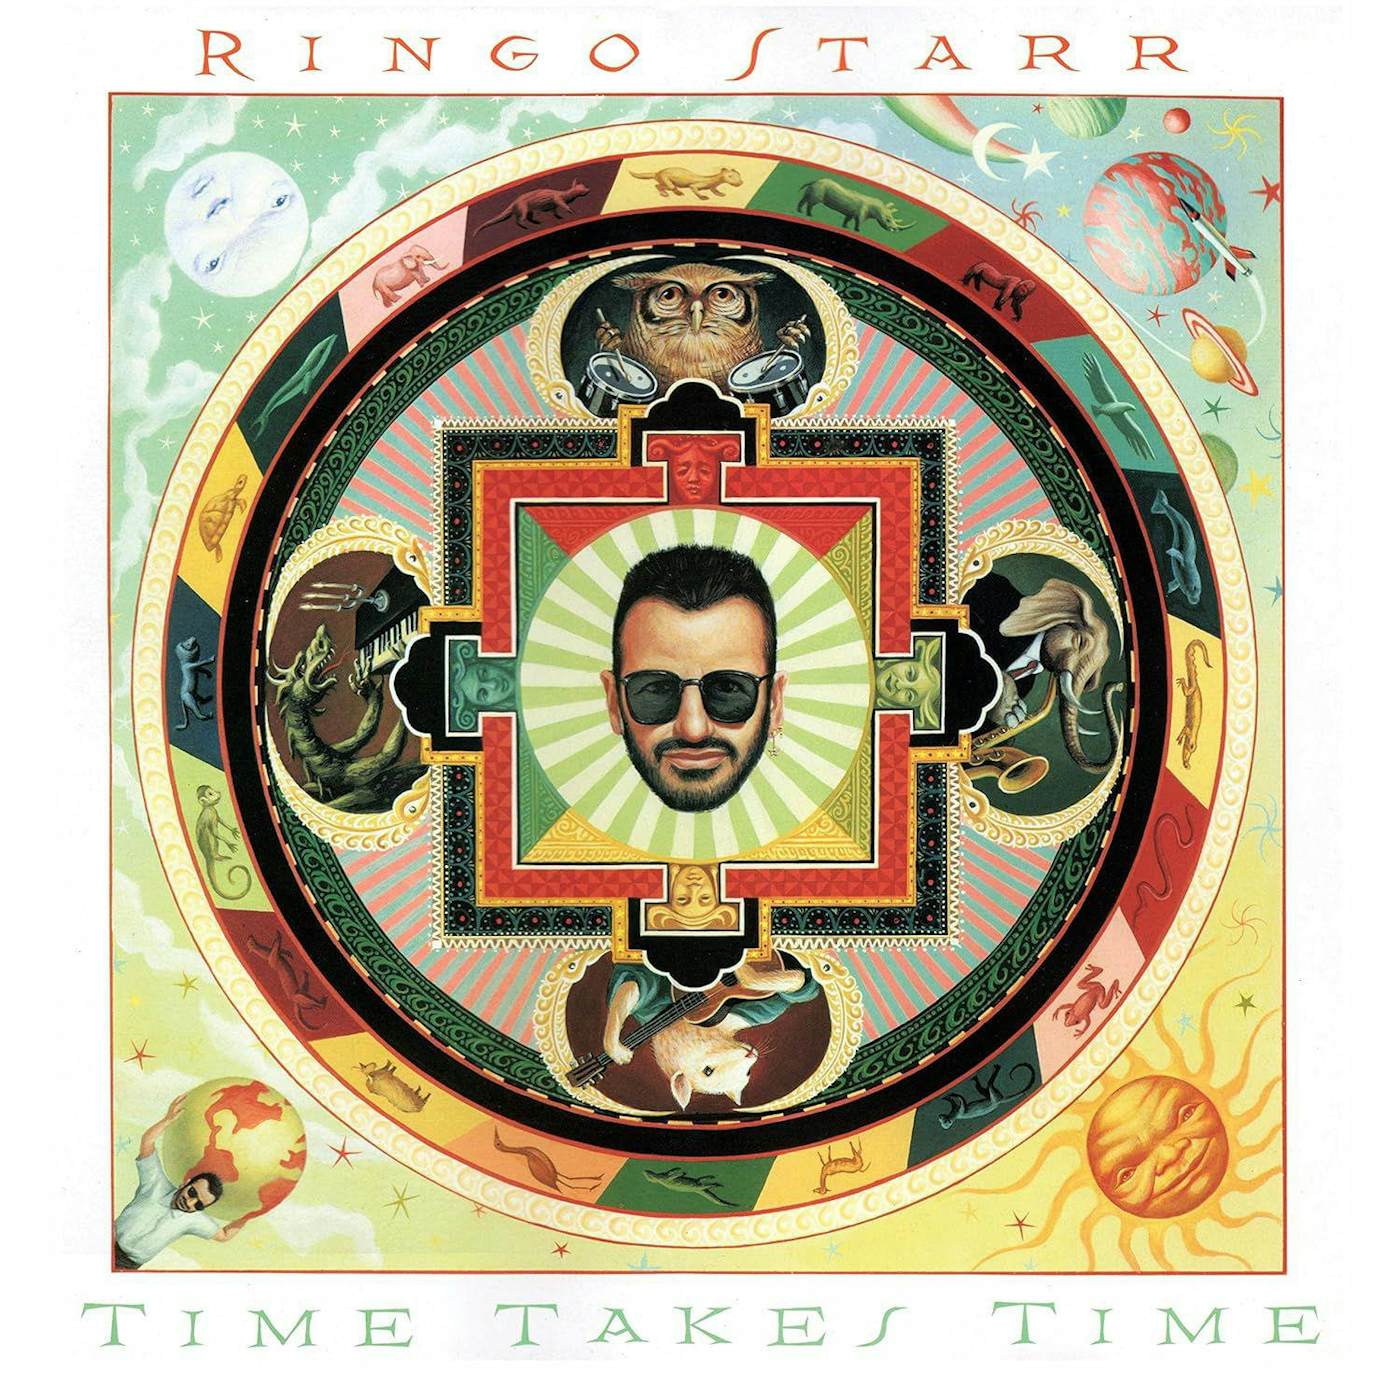 Ringo Starr Time Takes Time (Limited 180G Translucent Green Vinyl/Gatefold Cover/Dl Card) Vinyl Record